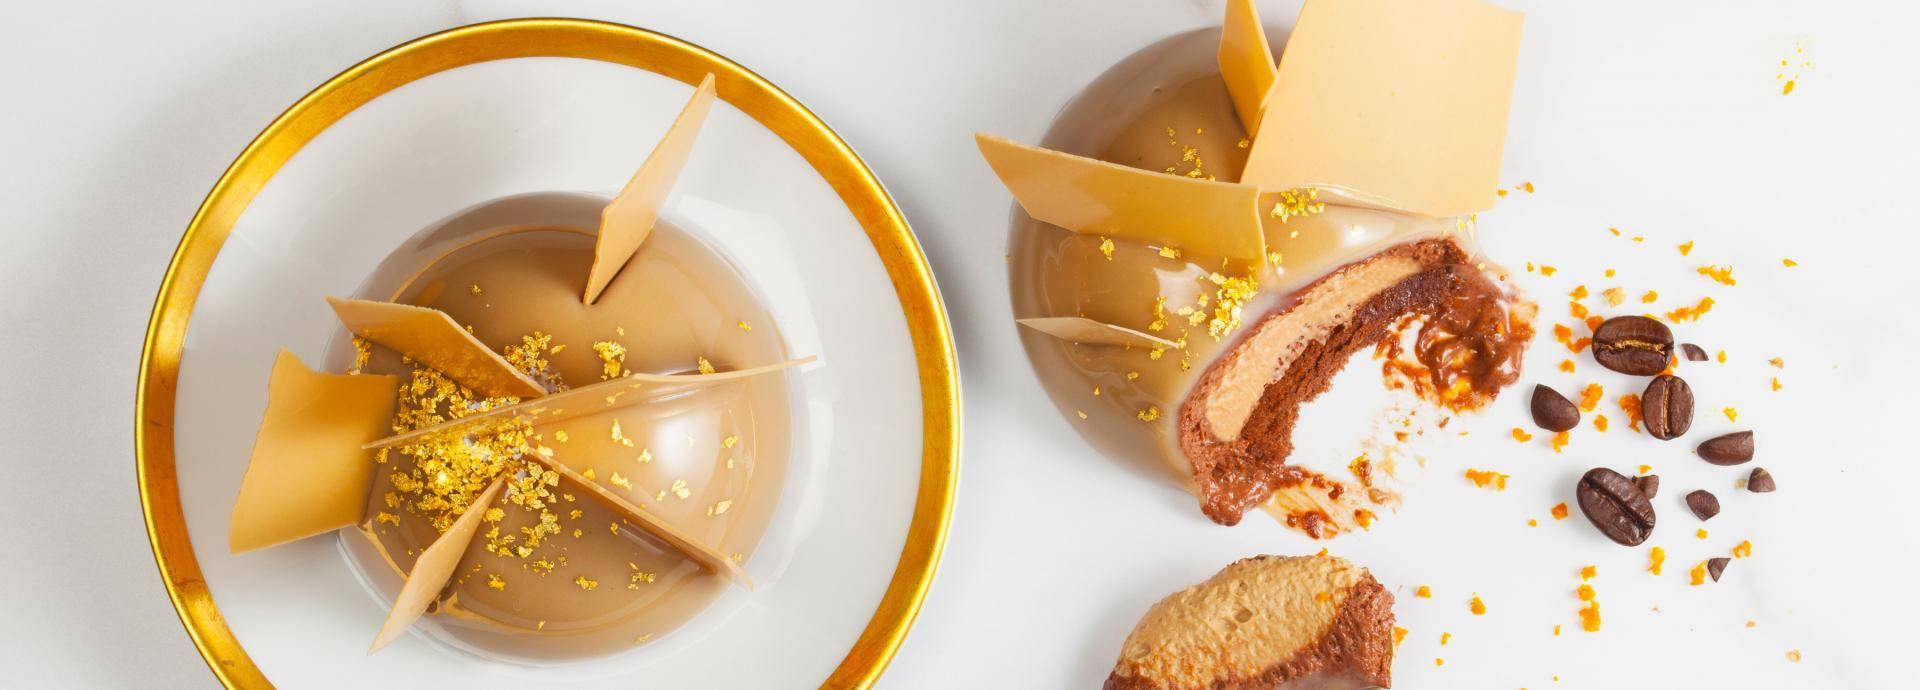 Finest Belgian Chocolate Gold - Recetas del chef